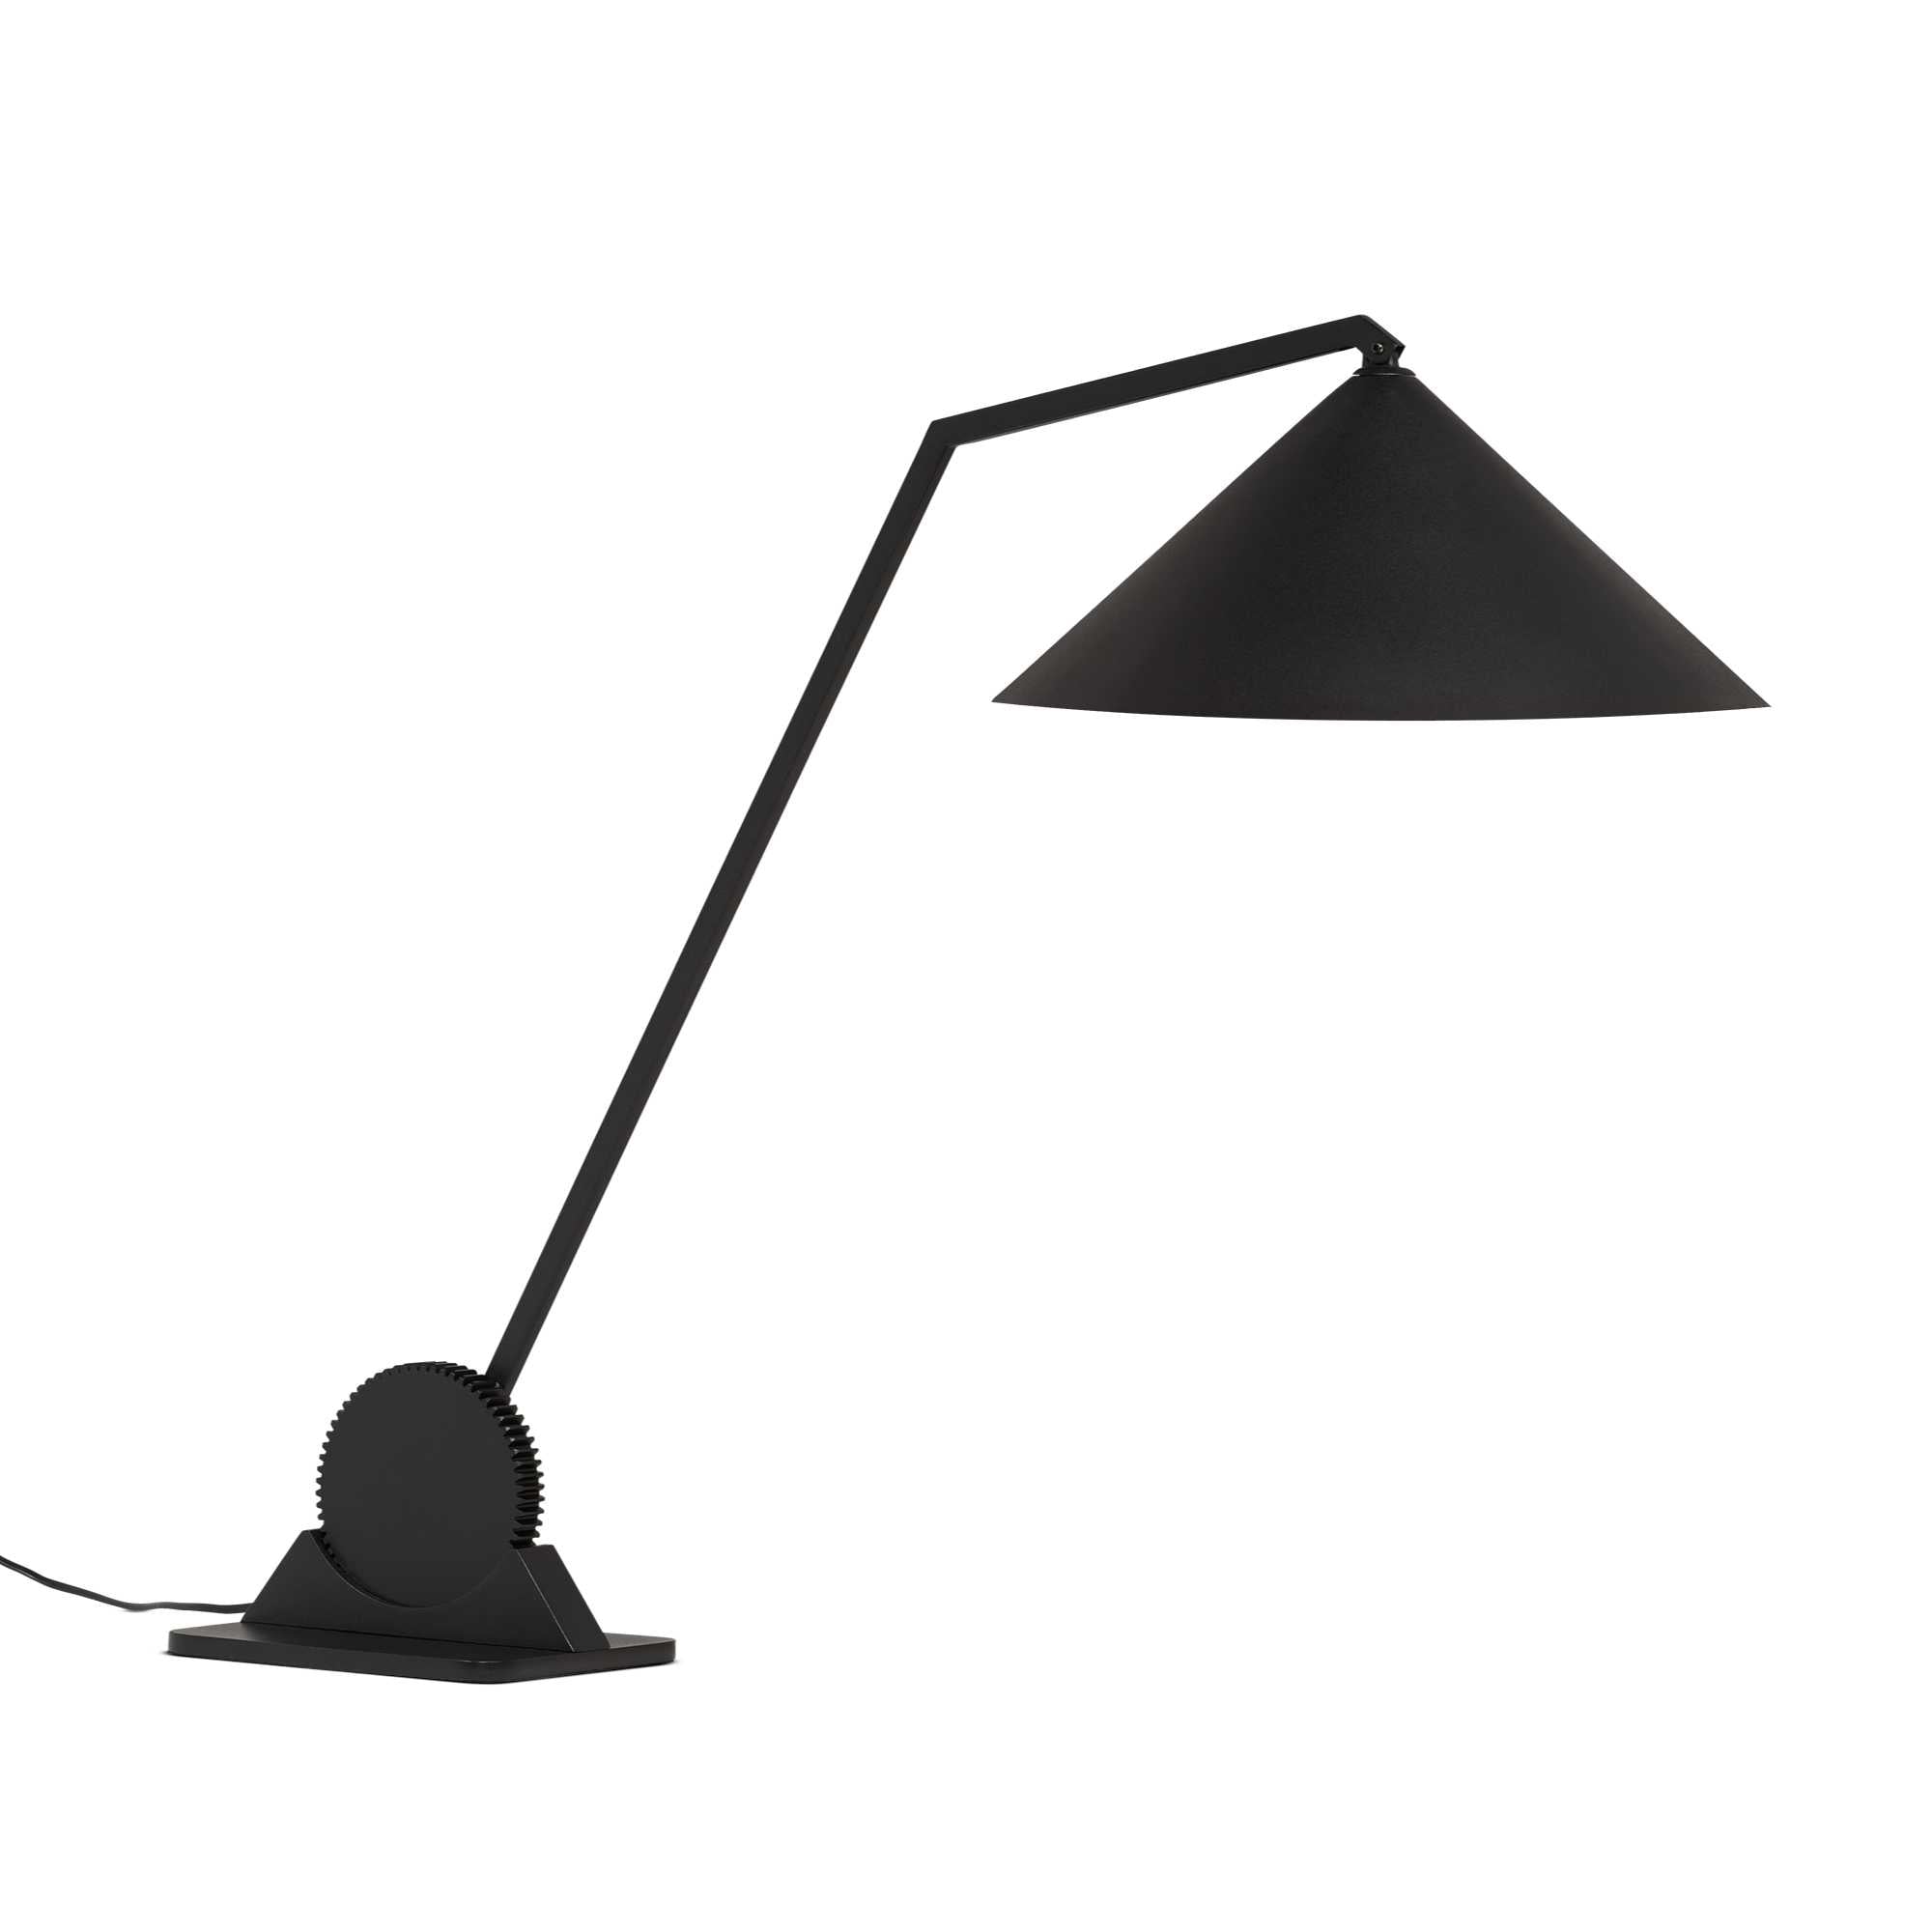 Northern Gear table lamp single